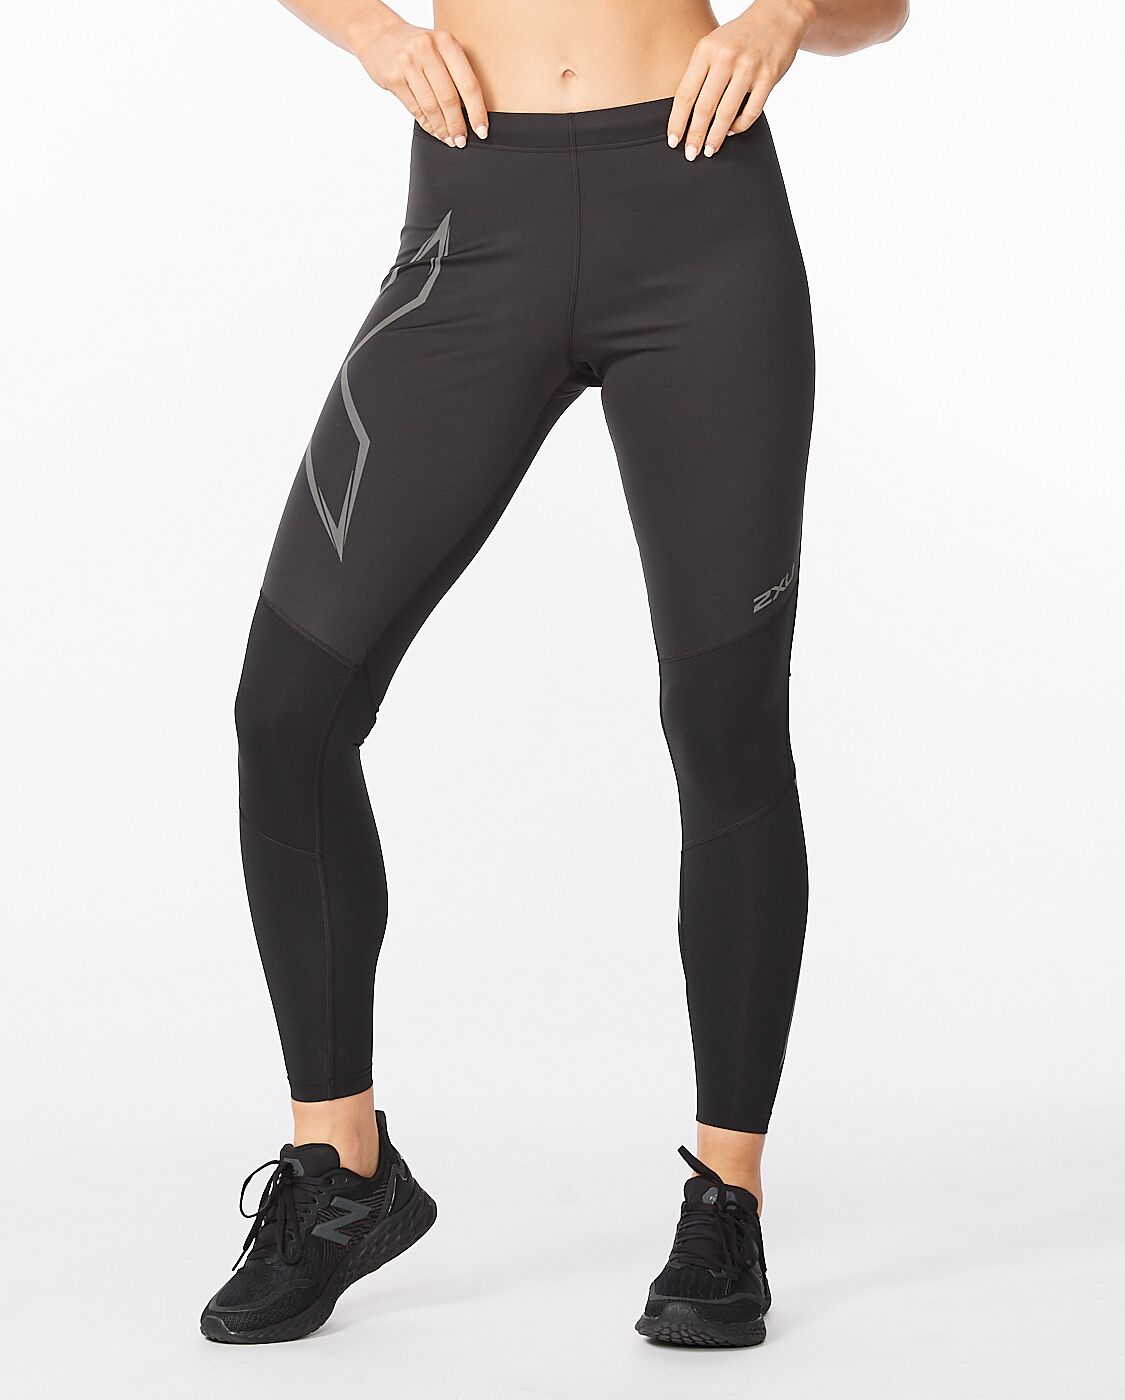 Nike Women's Shield Running Leggings, Black,XL - US